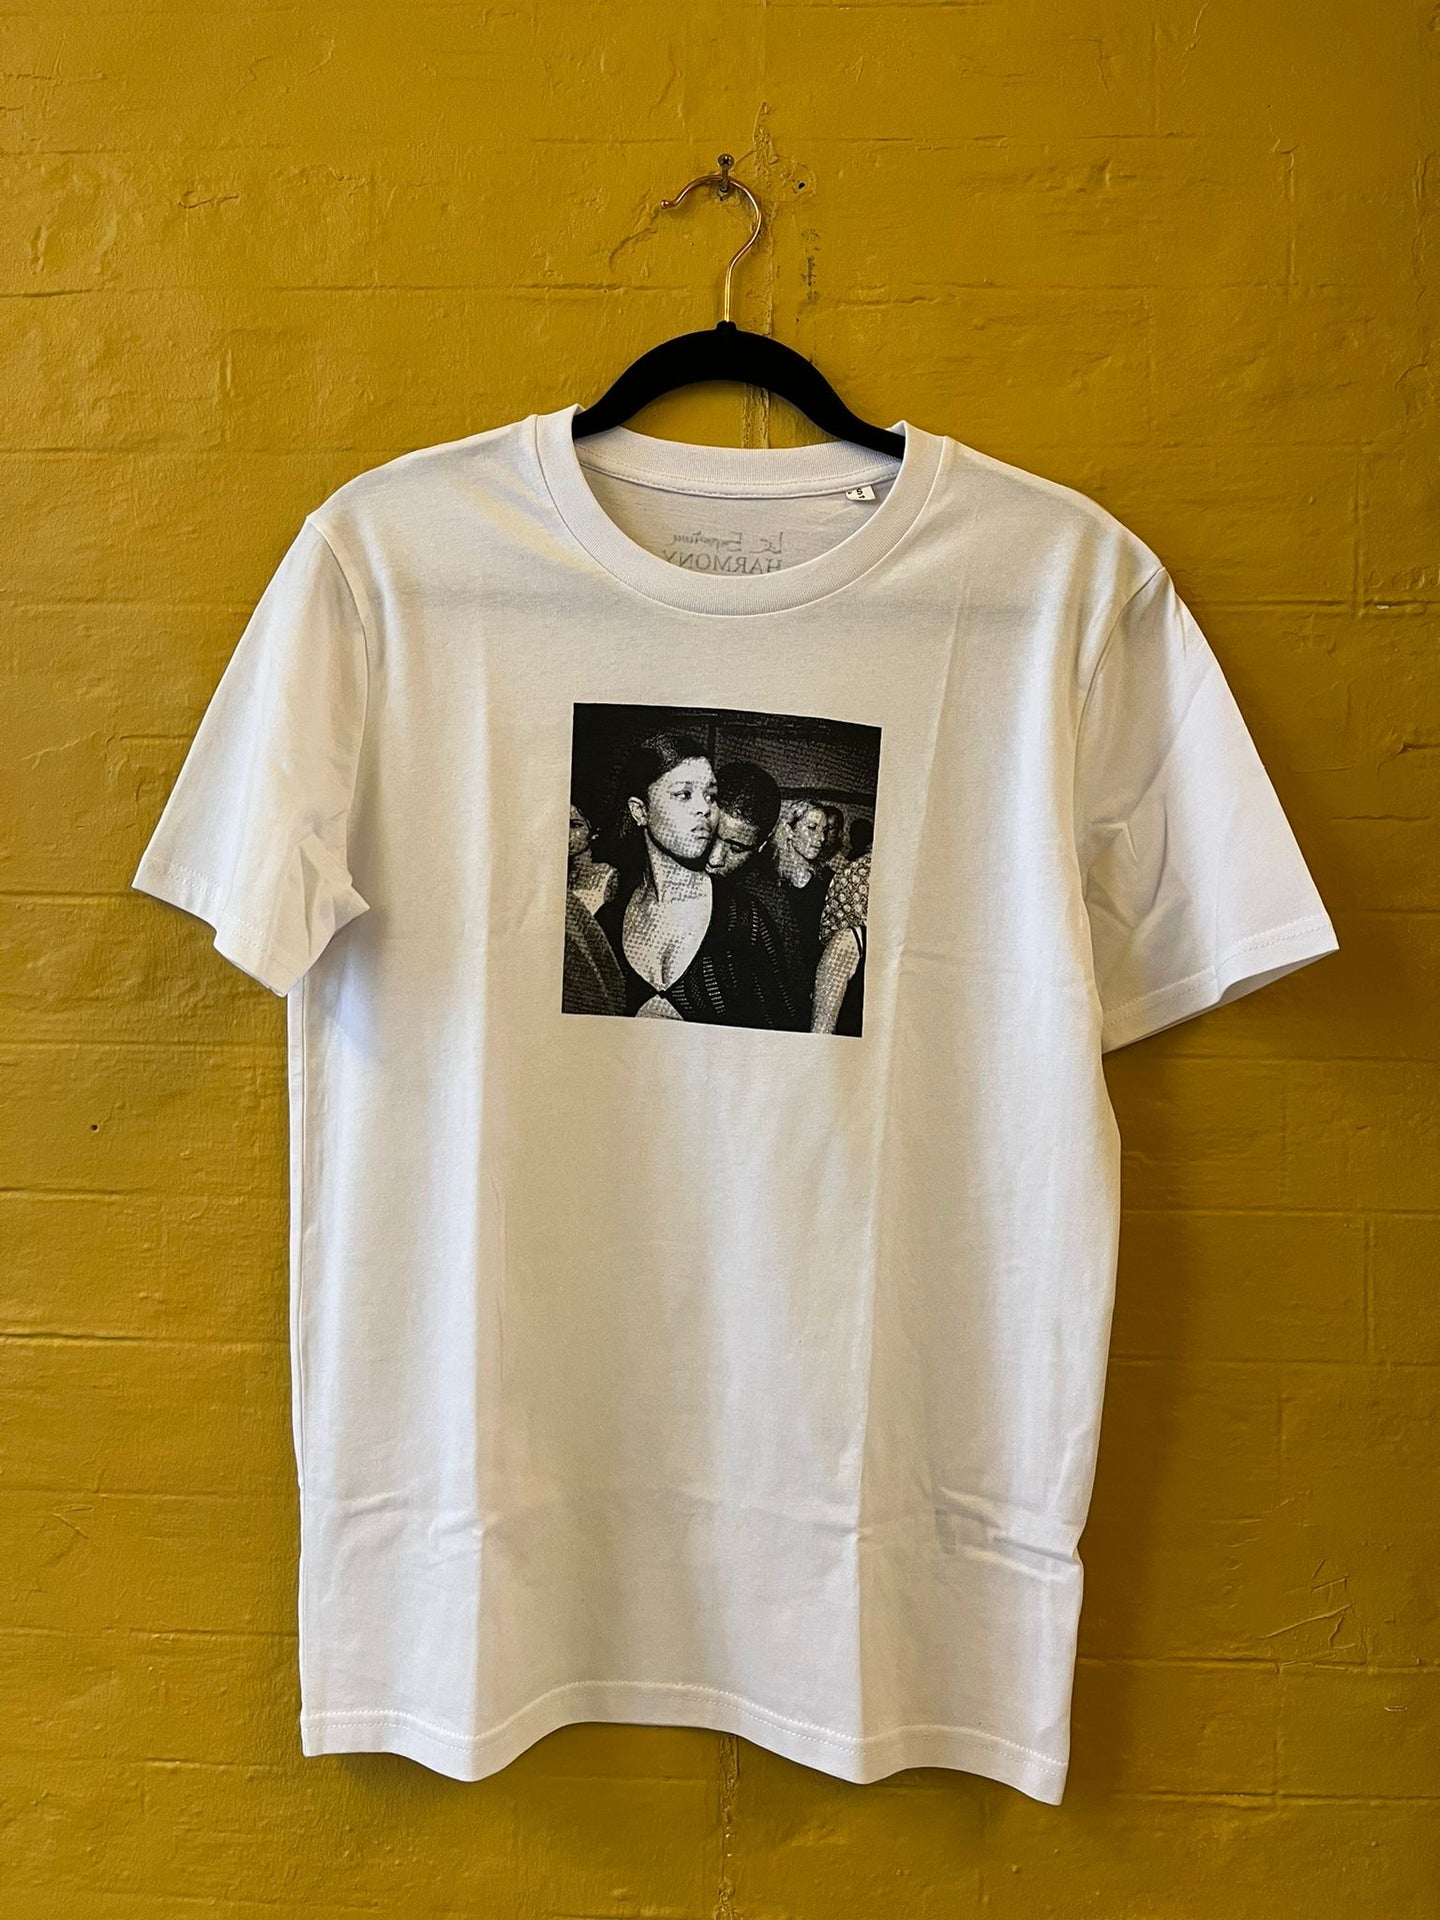 Ewen Spencer 'Metalheadz' T-shirt Edition